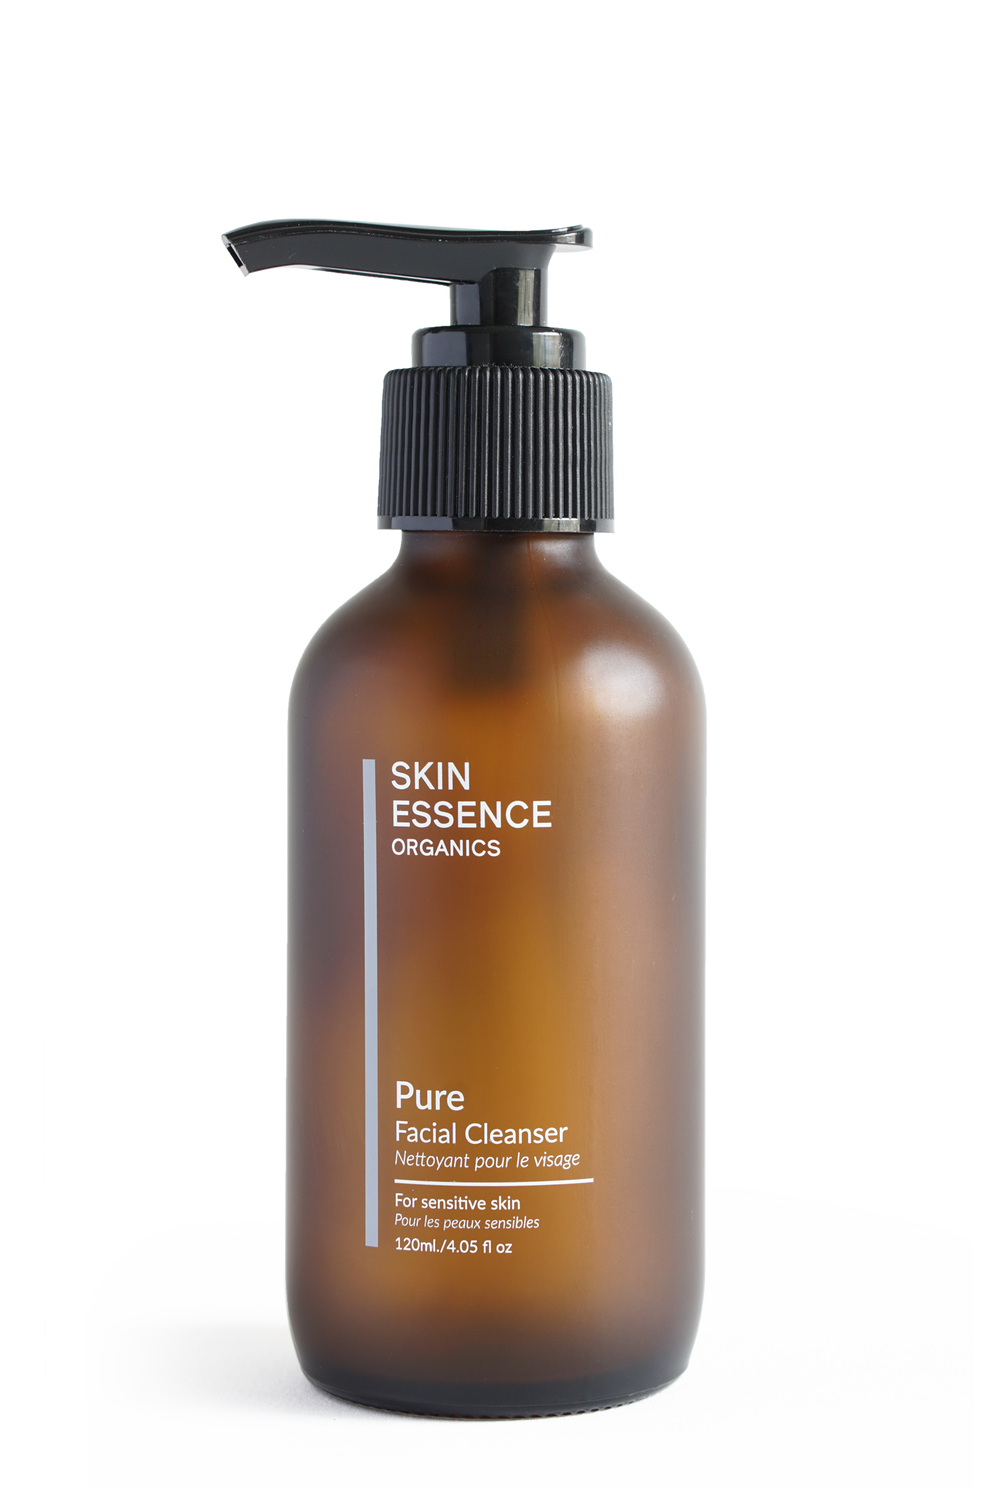 Skin Essence Organics Pure Facial Cleanser 120mL